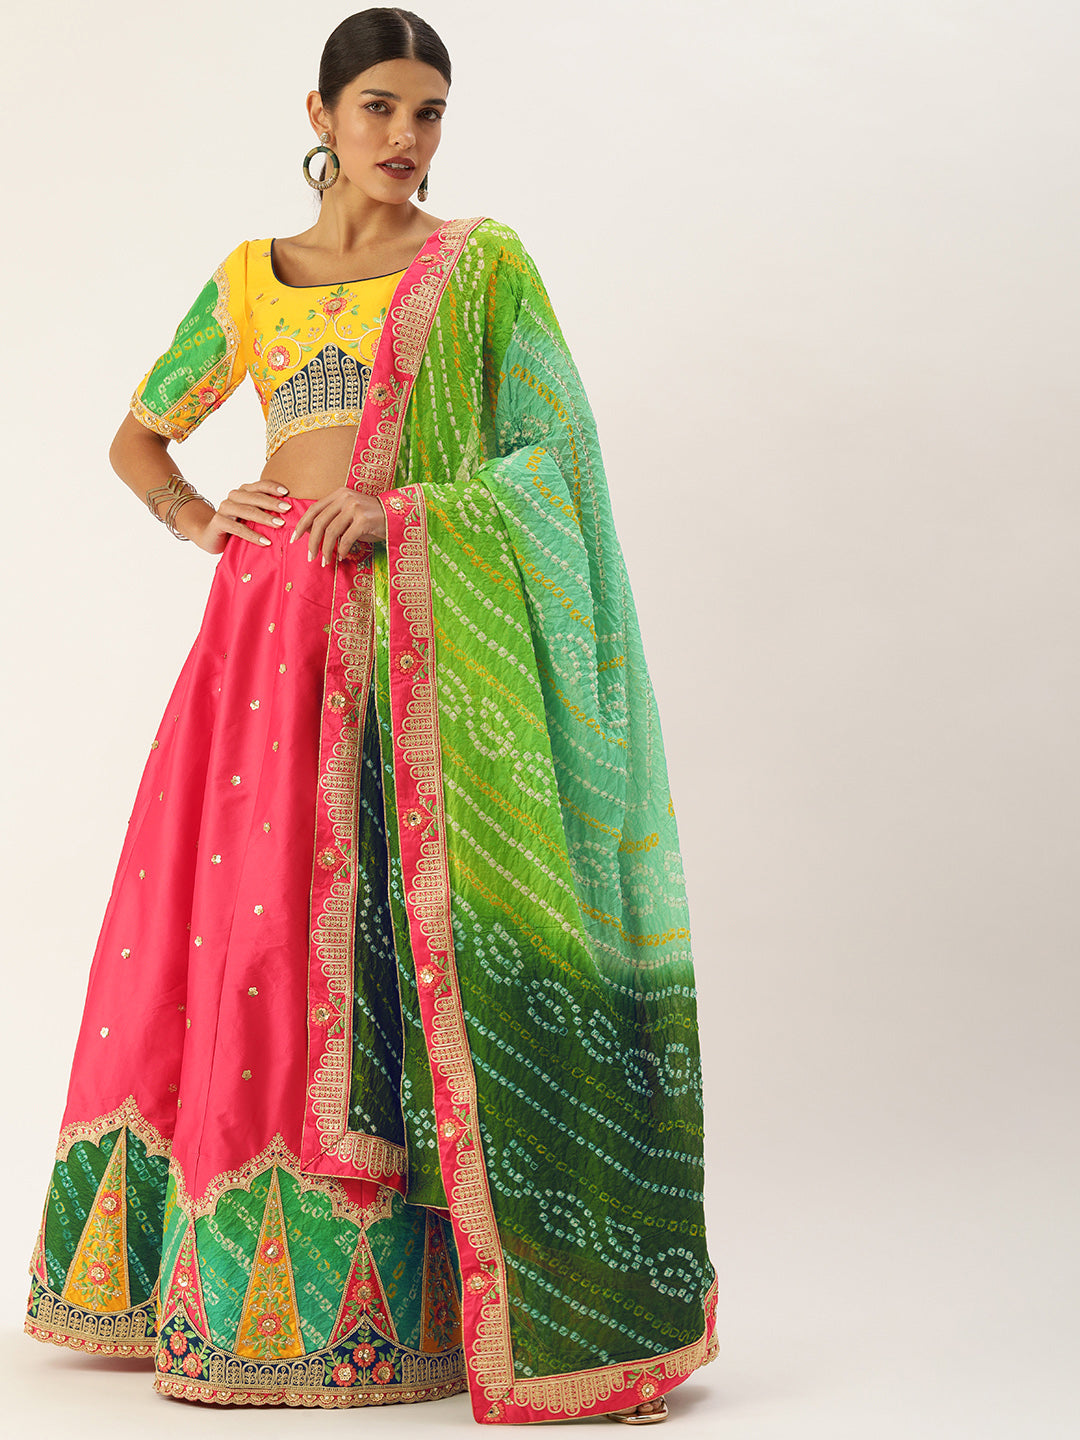 Mehendi Designed Blouse With Yellow Lehenga And Pink Dupatta | Lehenga  color combinations, Lehnga designs, Garba outfit